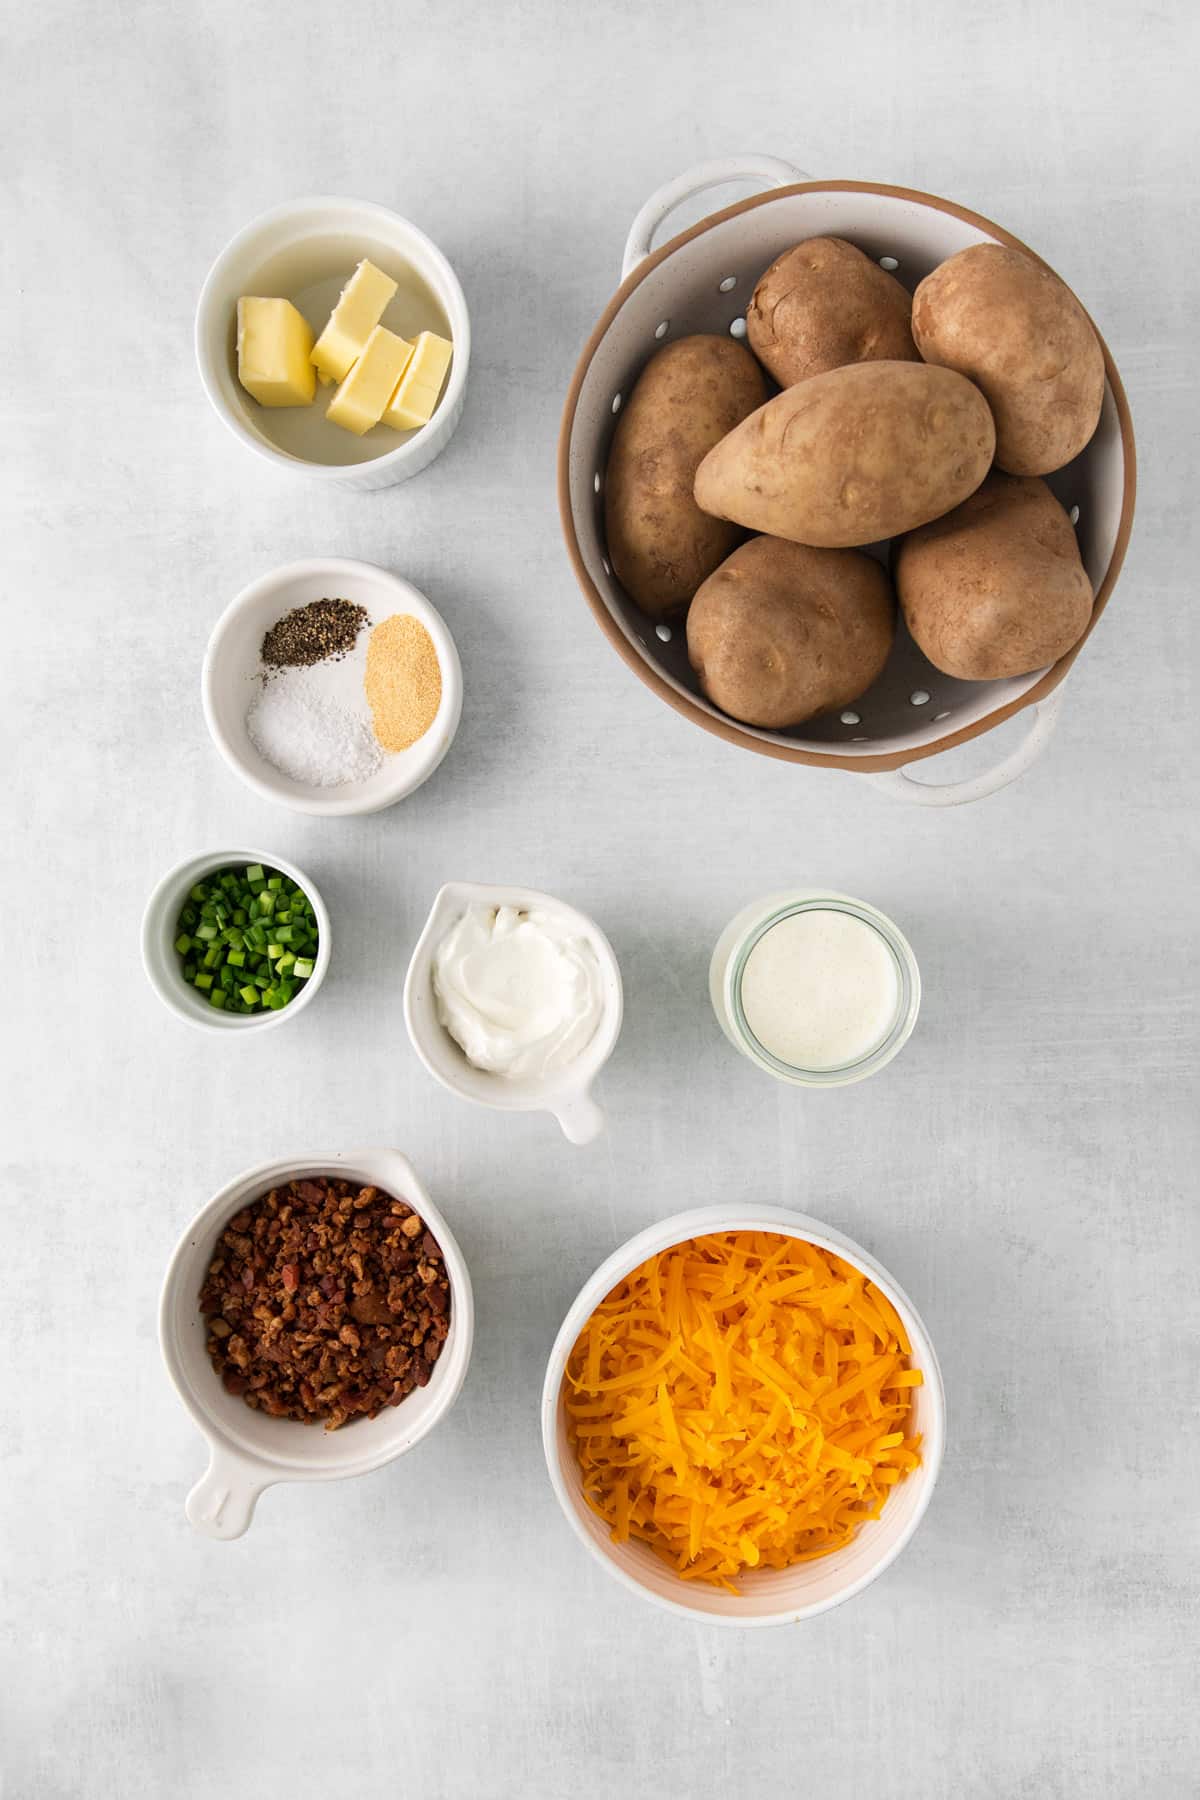 ingredients for potato casserole.